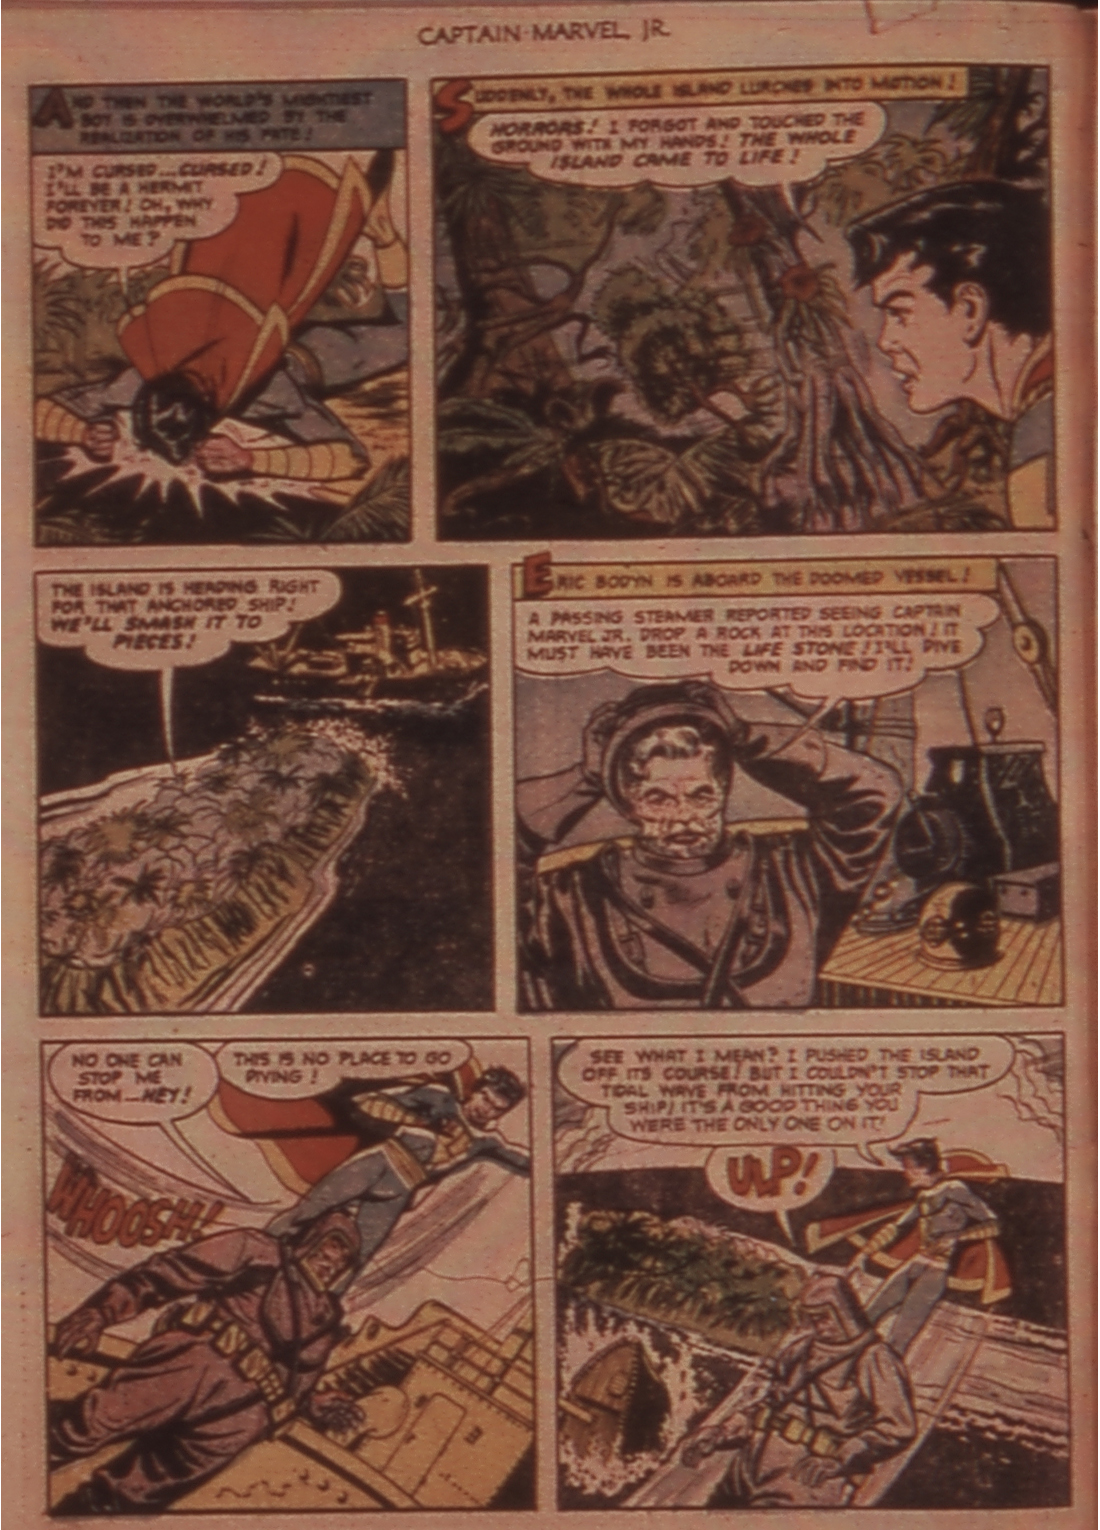 Read online Captain Marvel, Jr. comic -  Issue #98 - 48